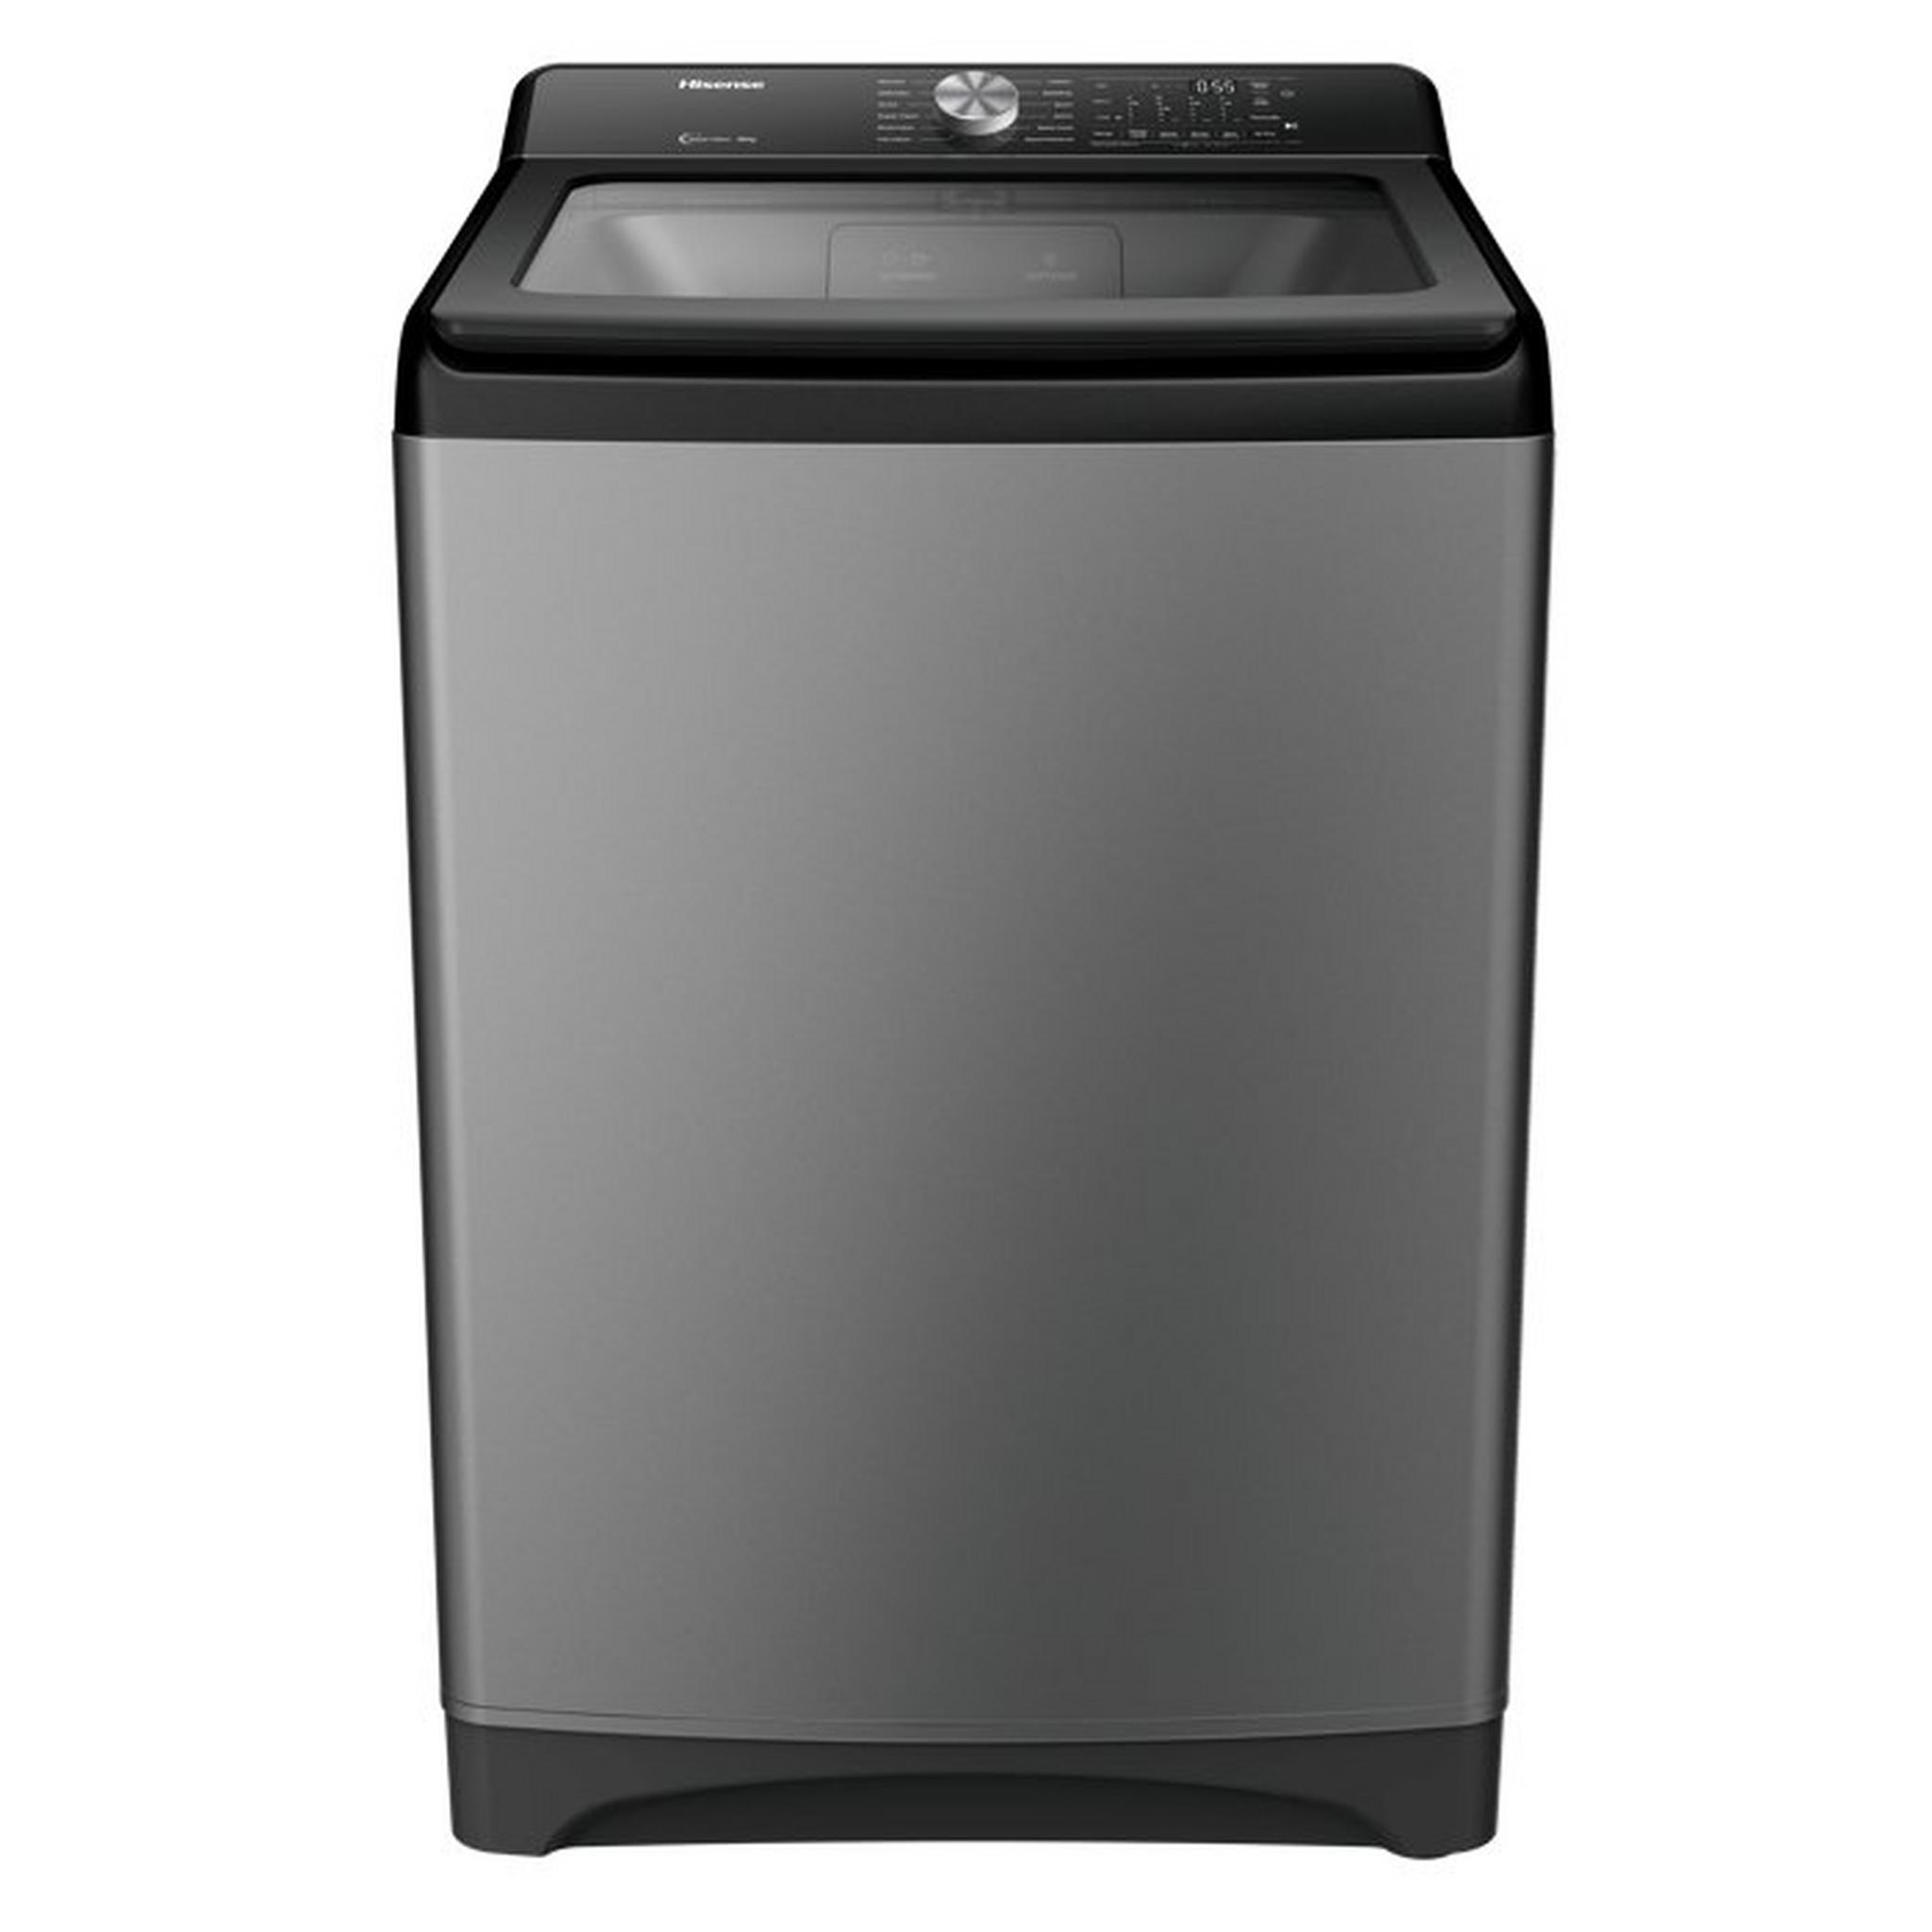 Hisense 20kg Top Load Washing Machine, 12 Programs, WT3T2023UT – Grey